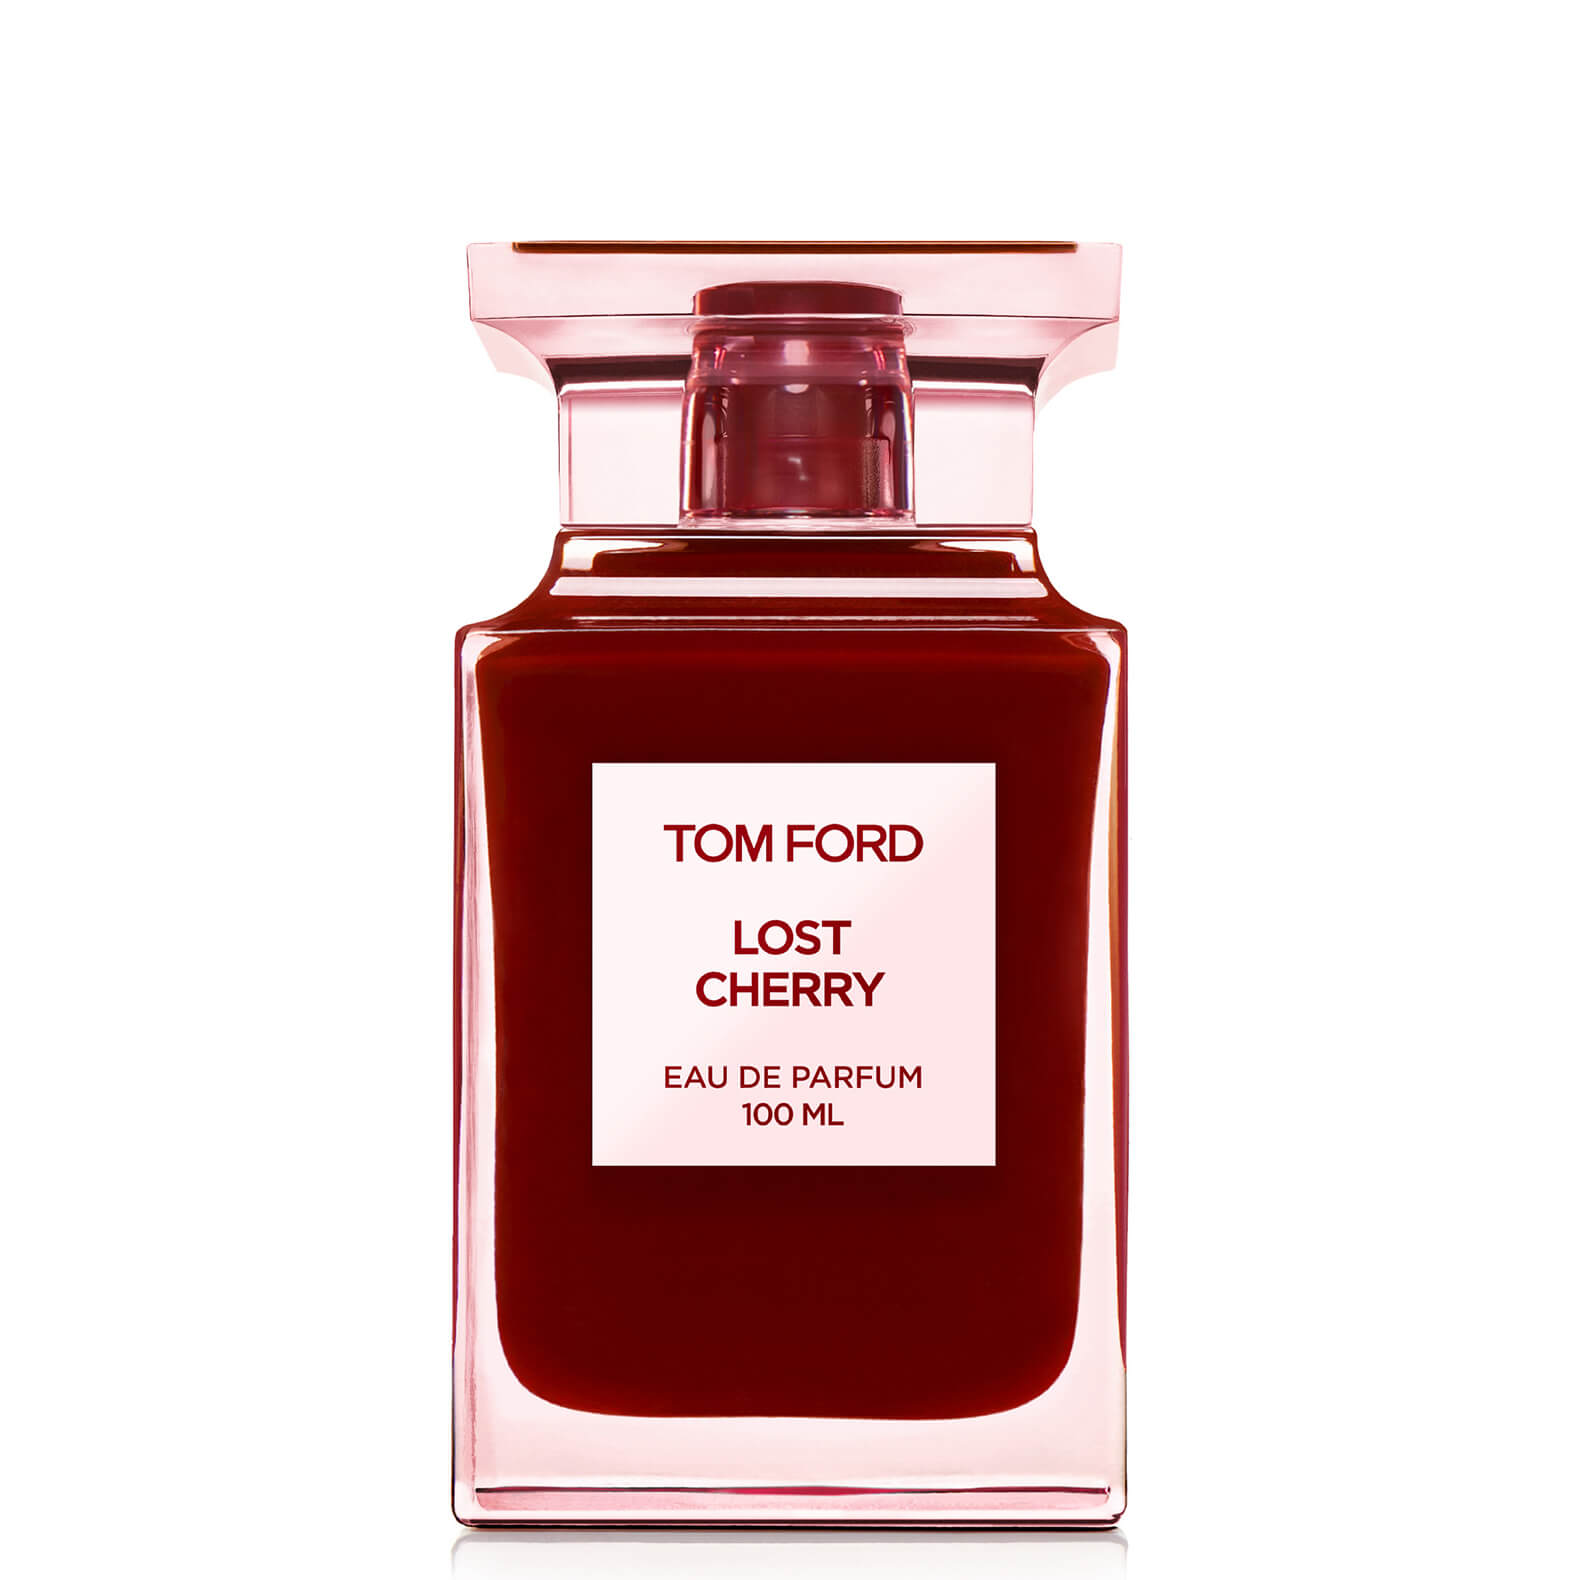 Photos - Women's Fragrance Tom Ford Lost Cherry Eau de Parfum Spray - 100ml T812010000 